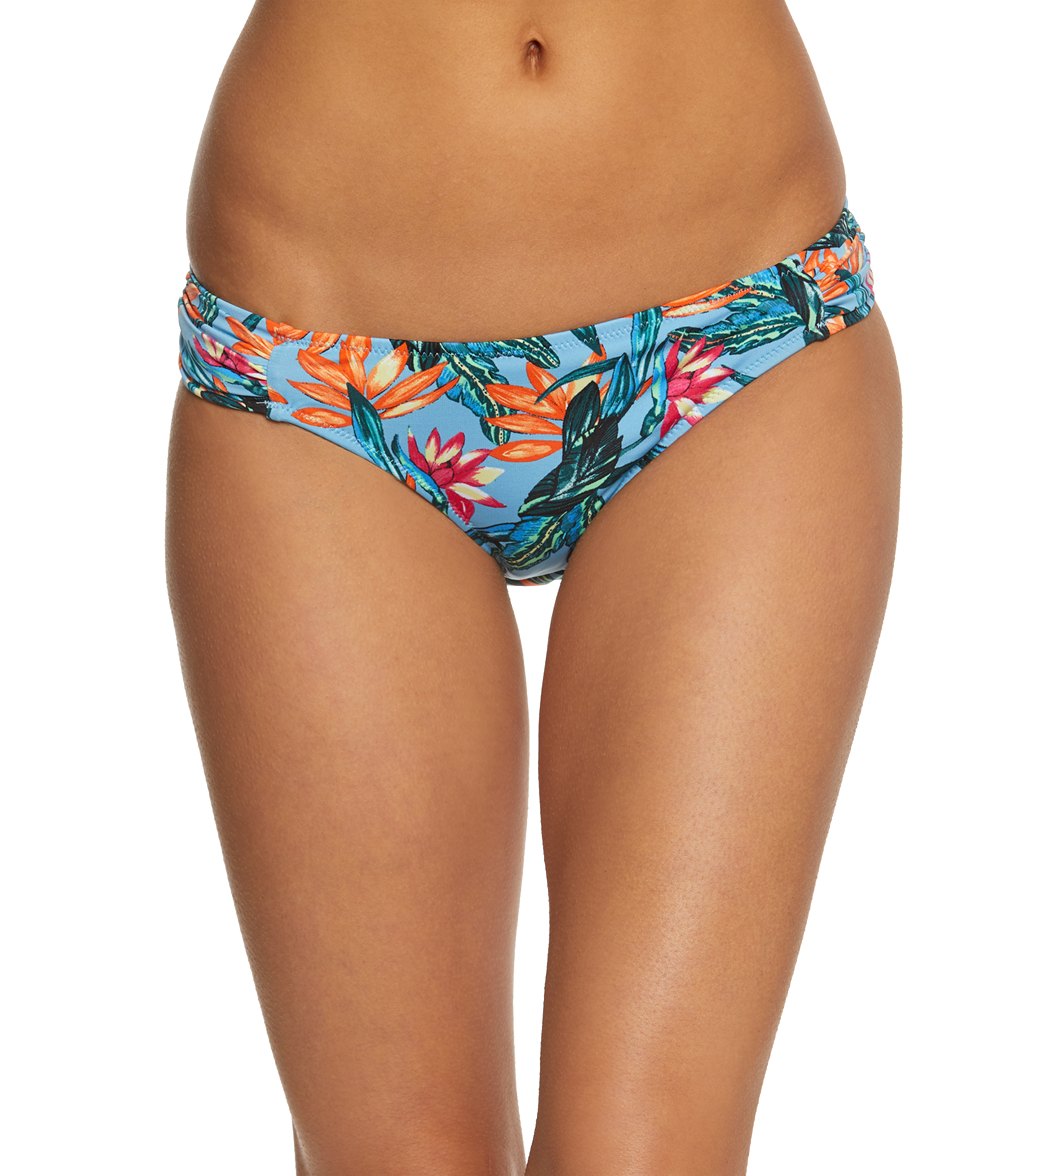 Jessica Simpson Lanakai Side Shirred Hipster Bikini Bottom - Sky Multi Small - Swimoutlet.com